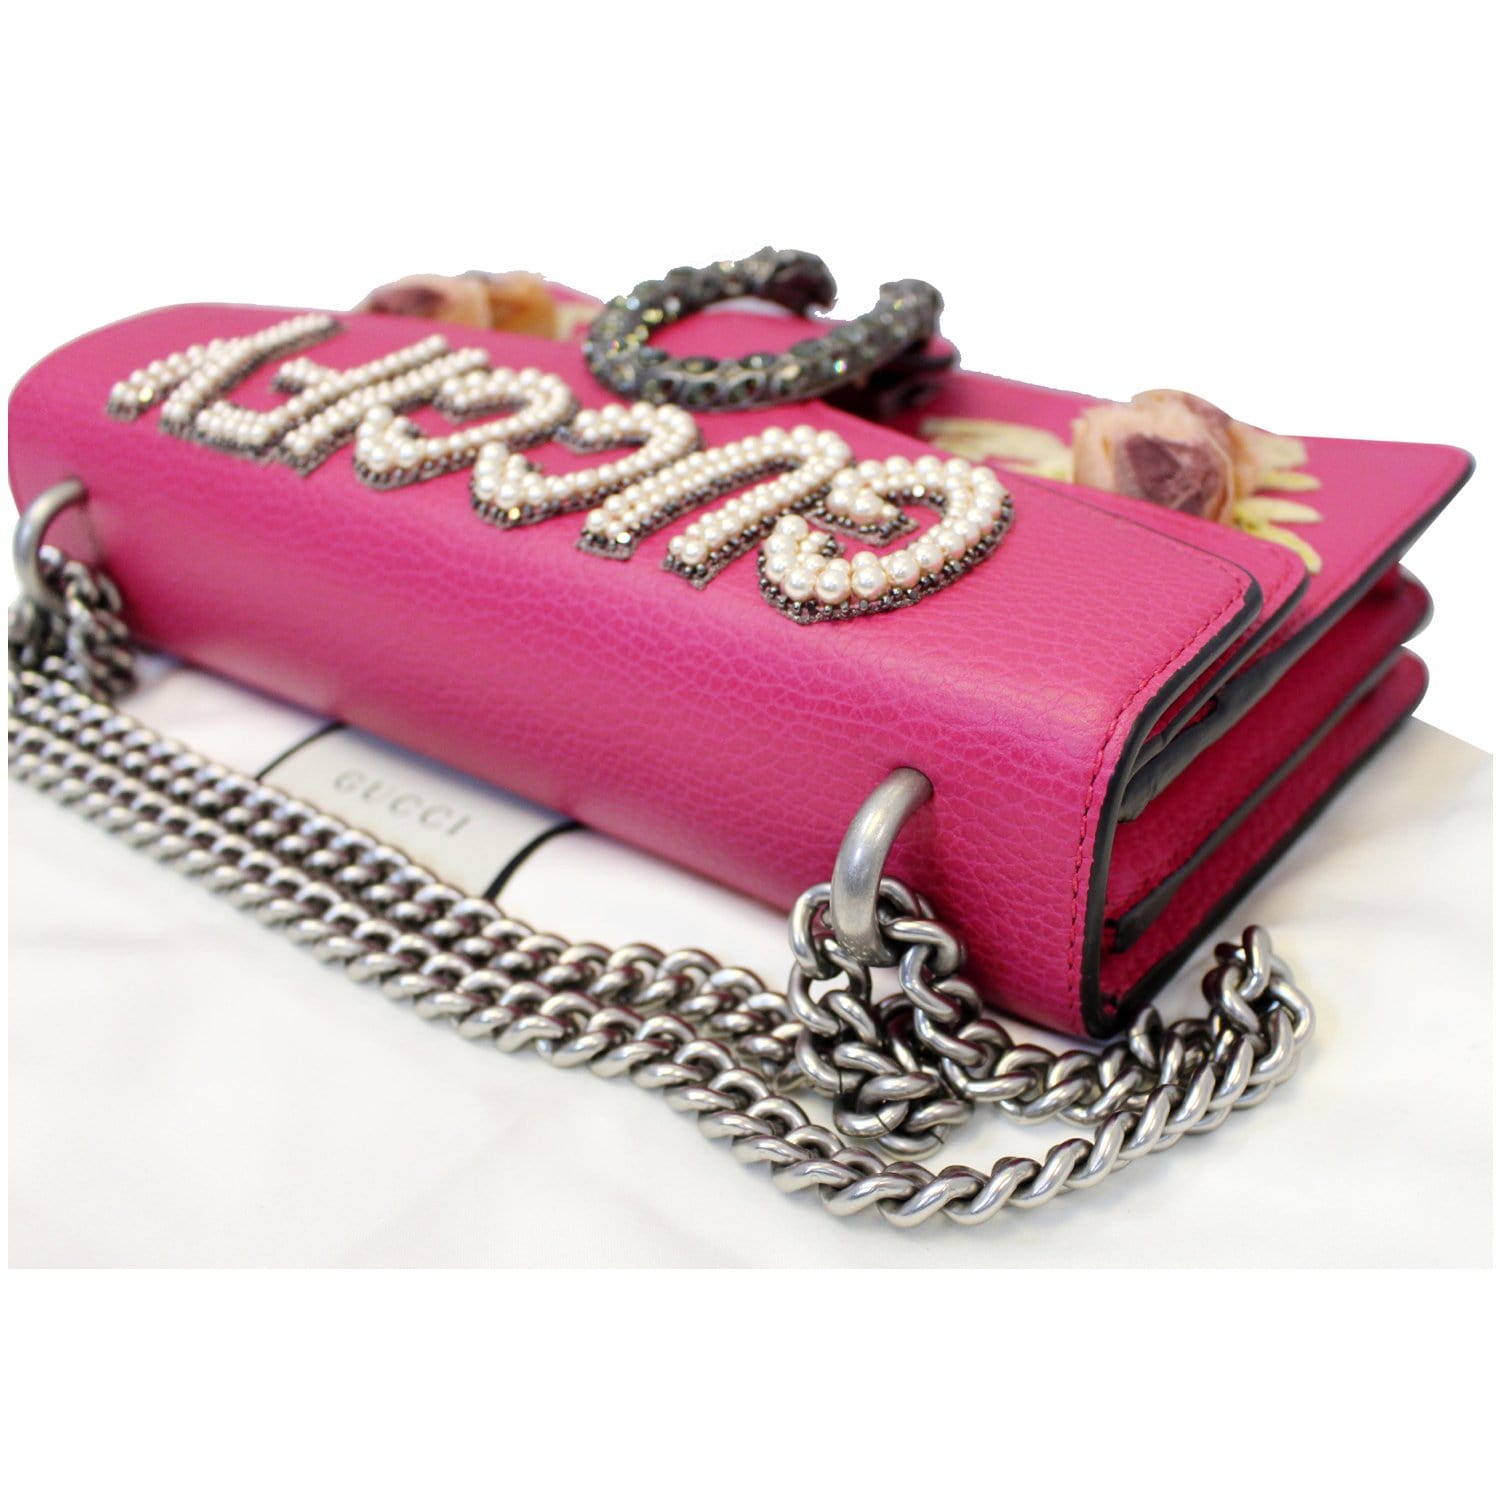 Gucci Dionysus Small Pink Shoulder Bag